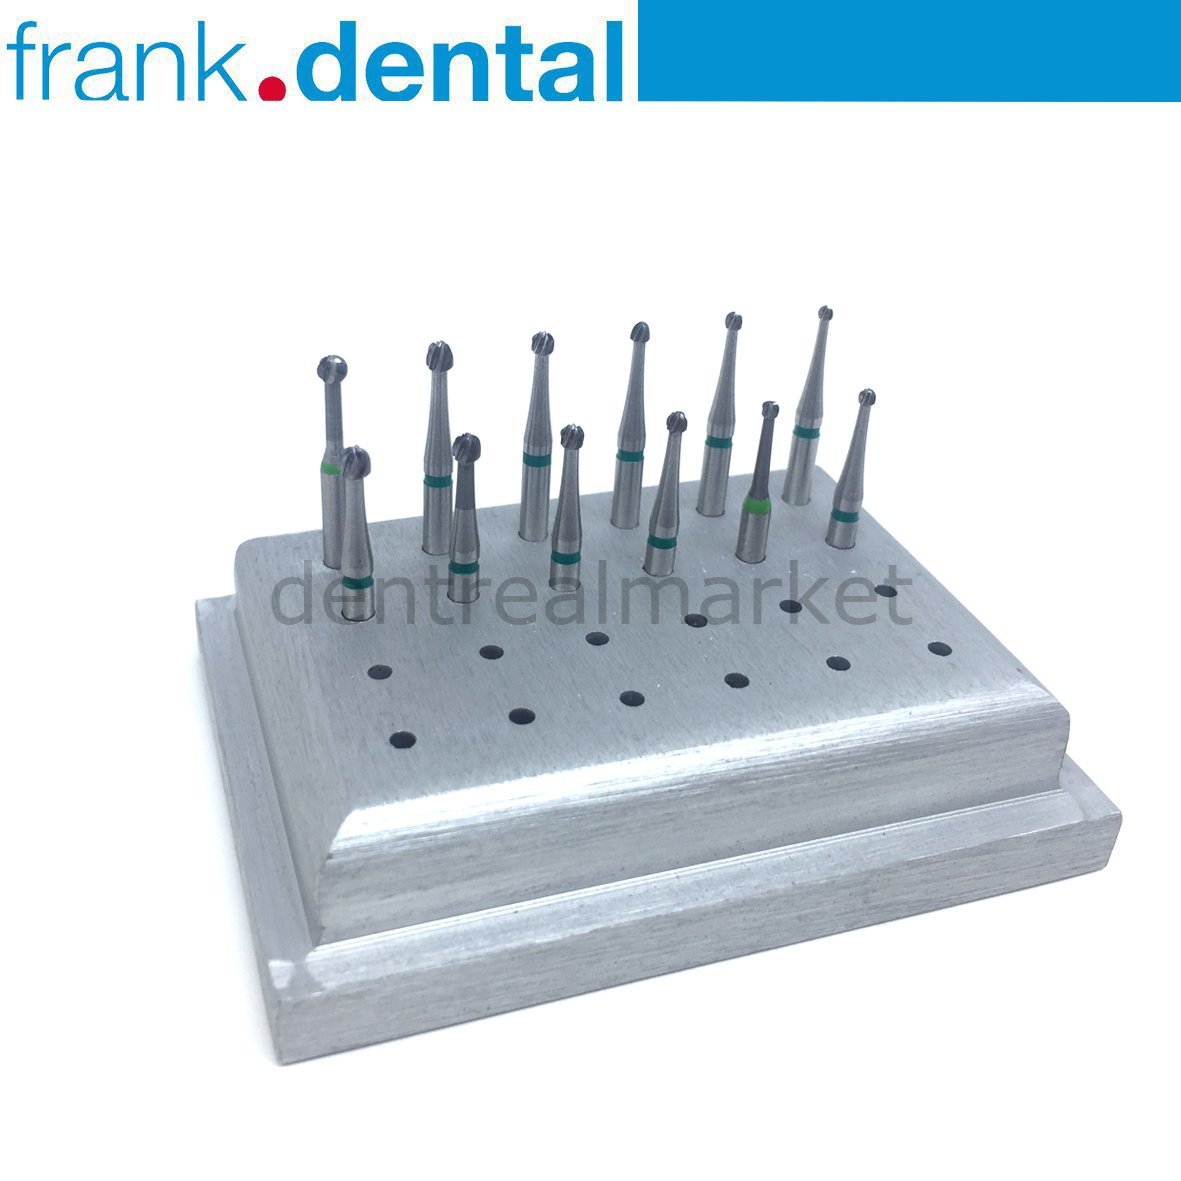 DentrealStore - Frank Dental Tungusten Carpide Rond Burs Kit for Contra- Angle